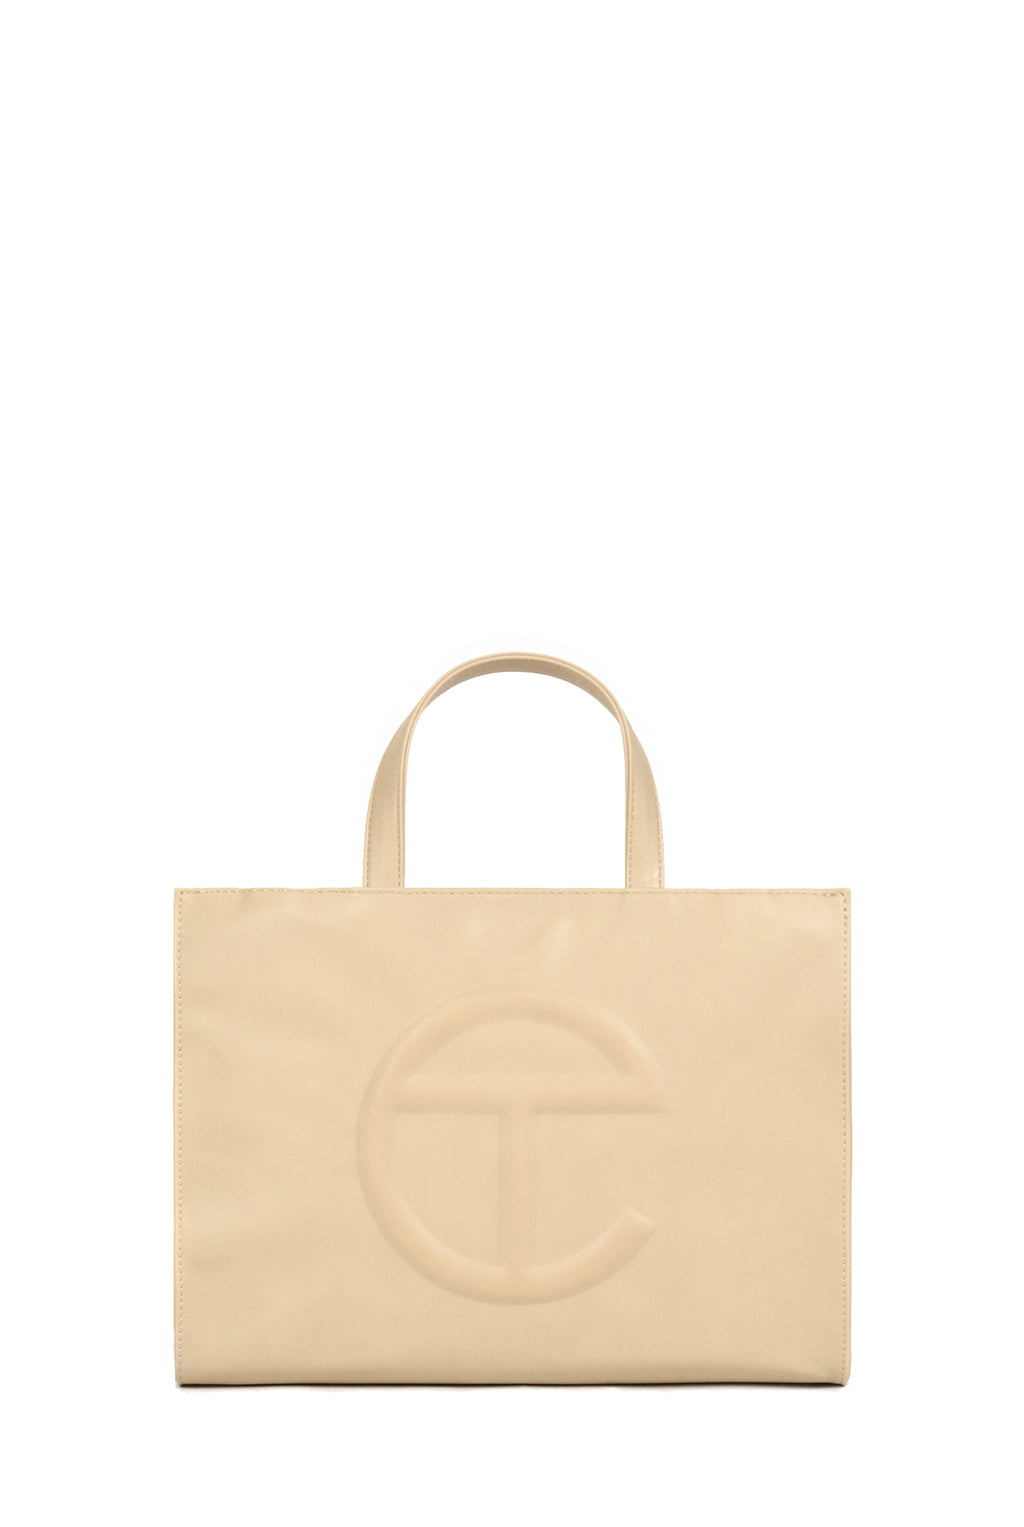 Telfar Medium Shopping Bag, Cream